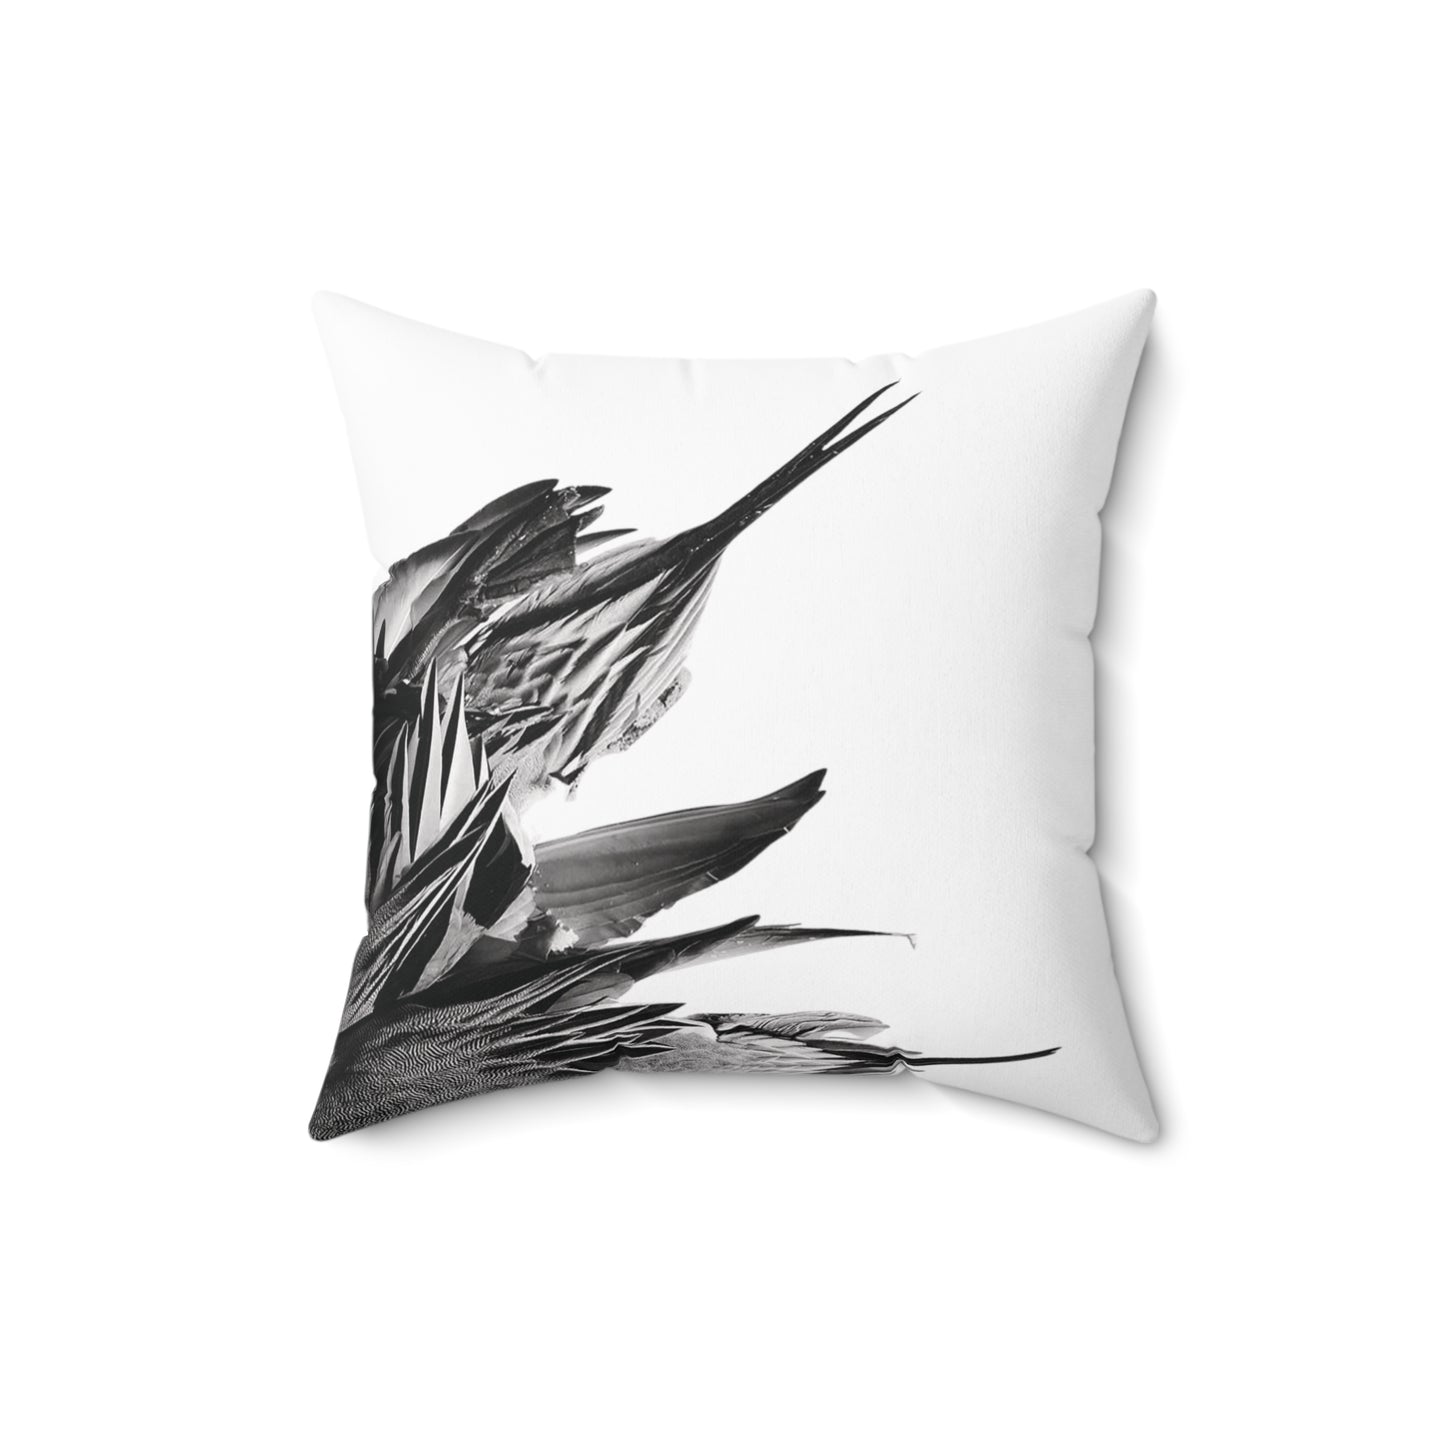 B&W Pintail Feather Pillow